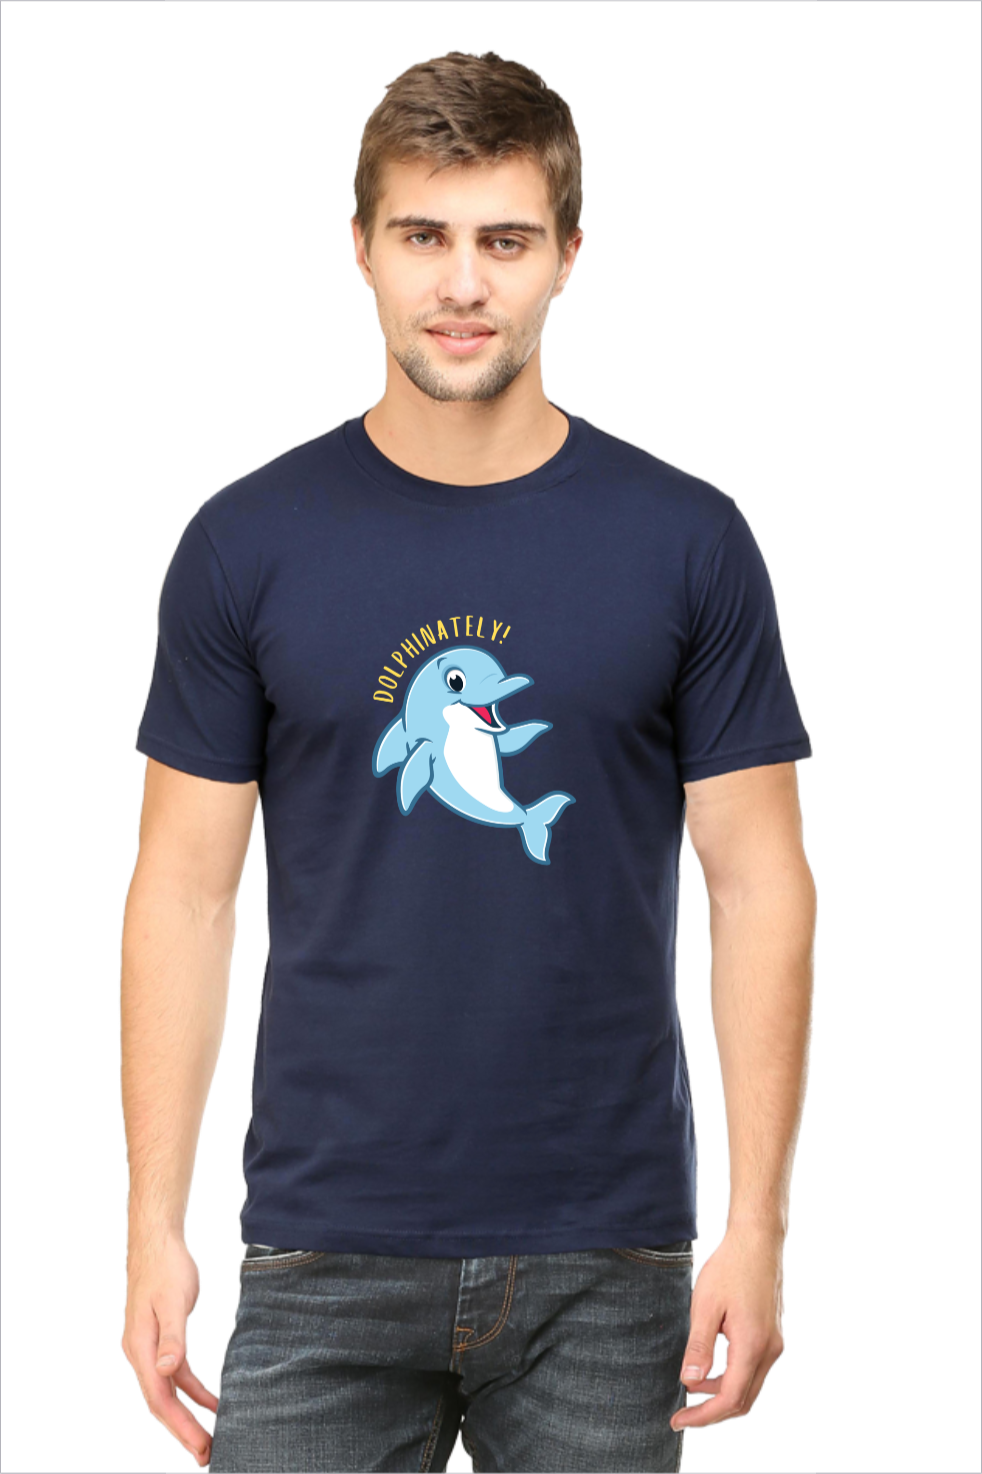 Men's Dolphinately Navy-Blue Half Sleeve T-Shirt